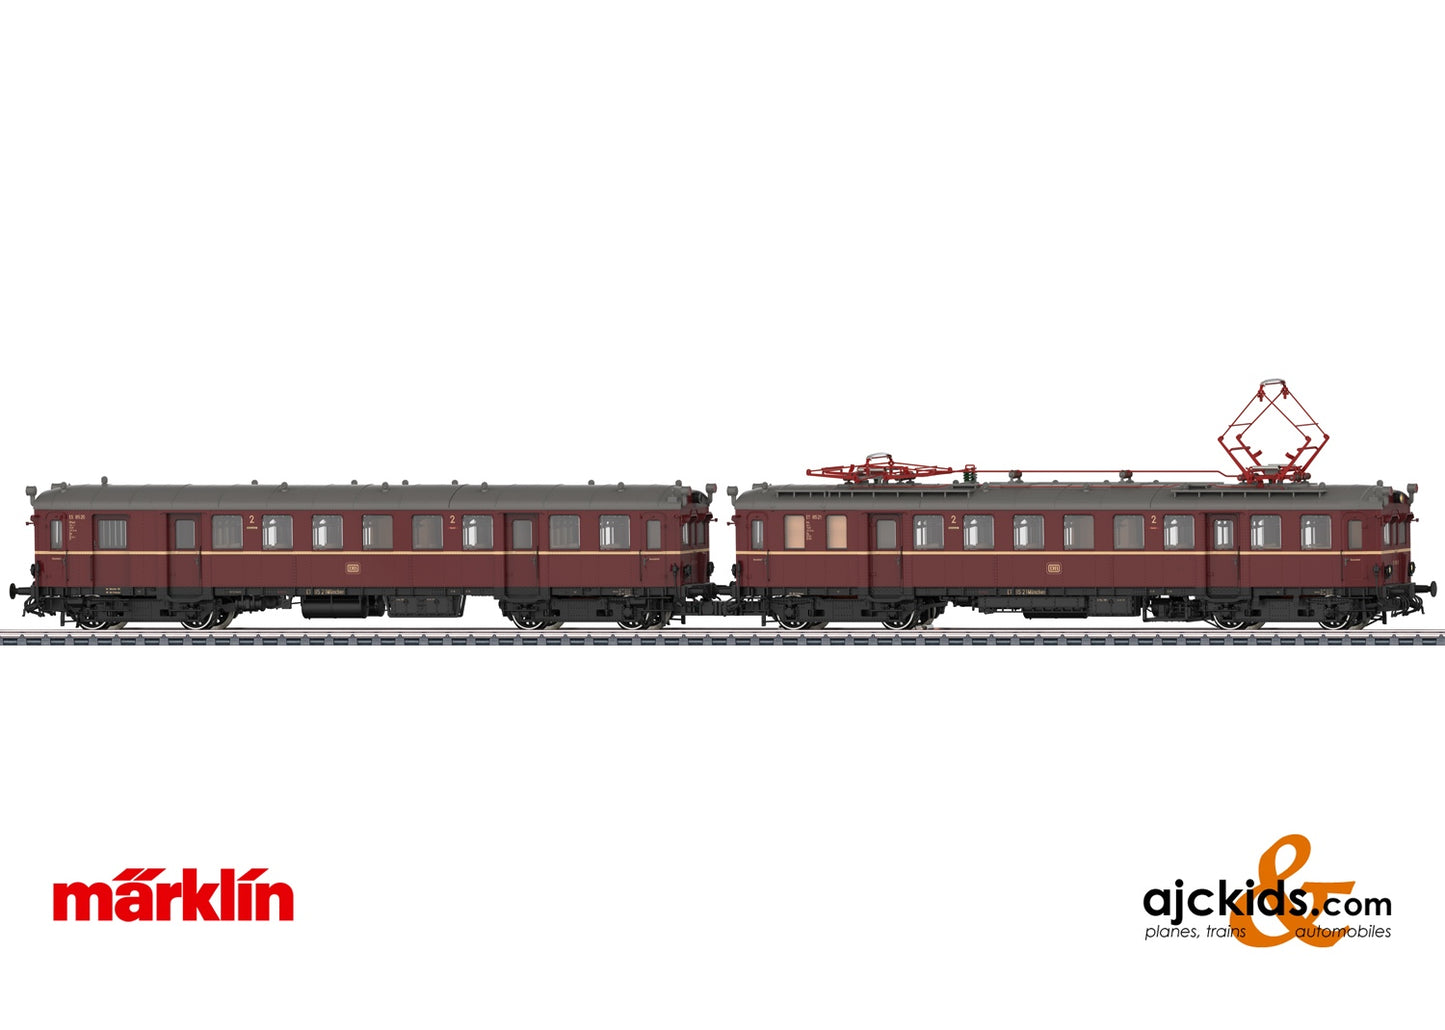 Marklin 39853 - Class ET 85 Powered Rail Car at Ajckids.com